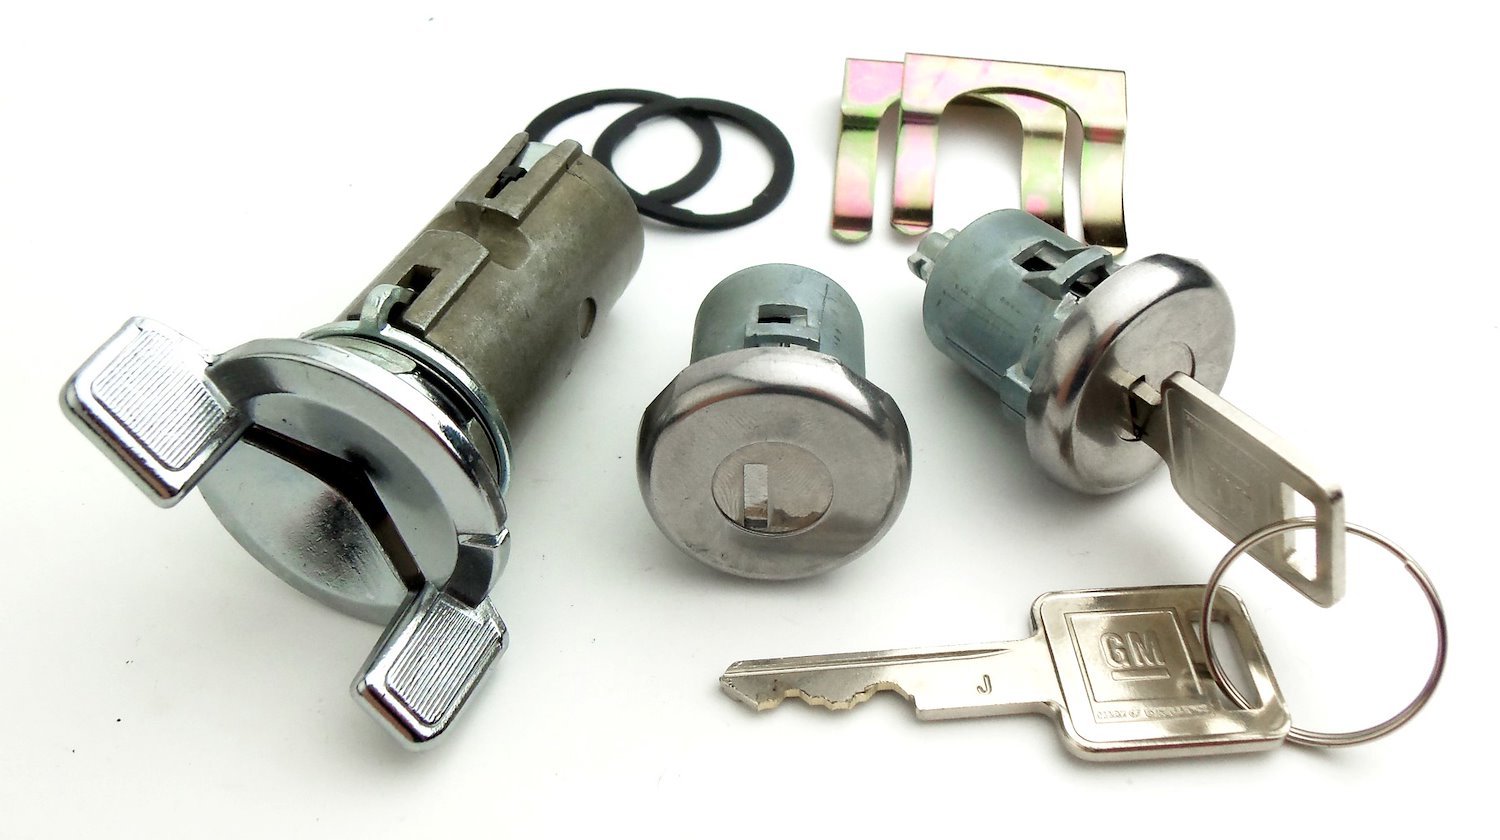 Ignition & Door Lock Set Fits Select 1979-1987 GM Models [Square Style GM Keys]